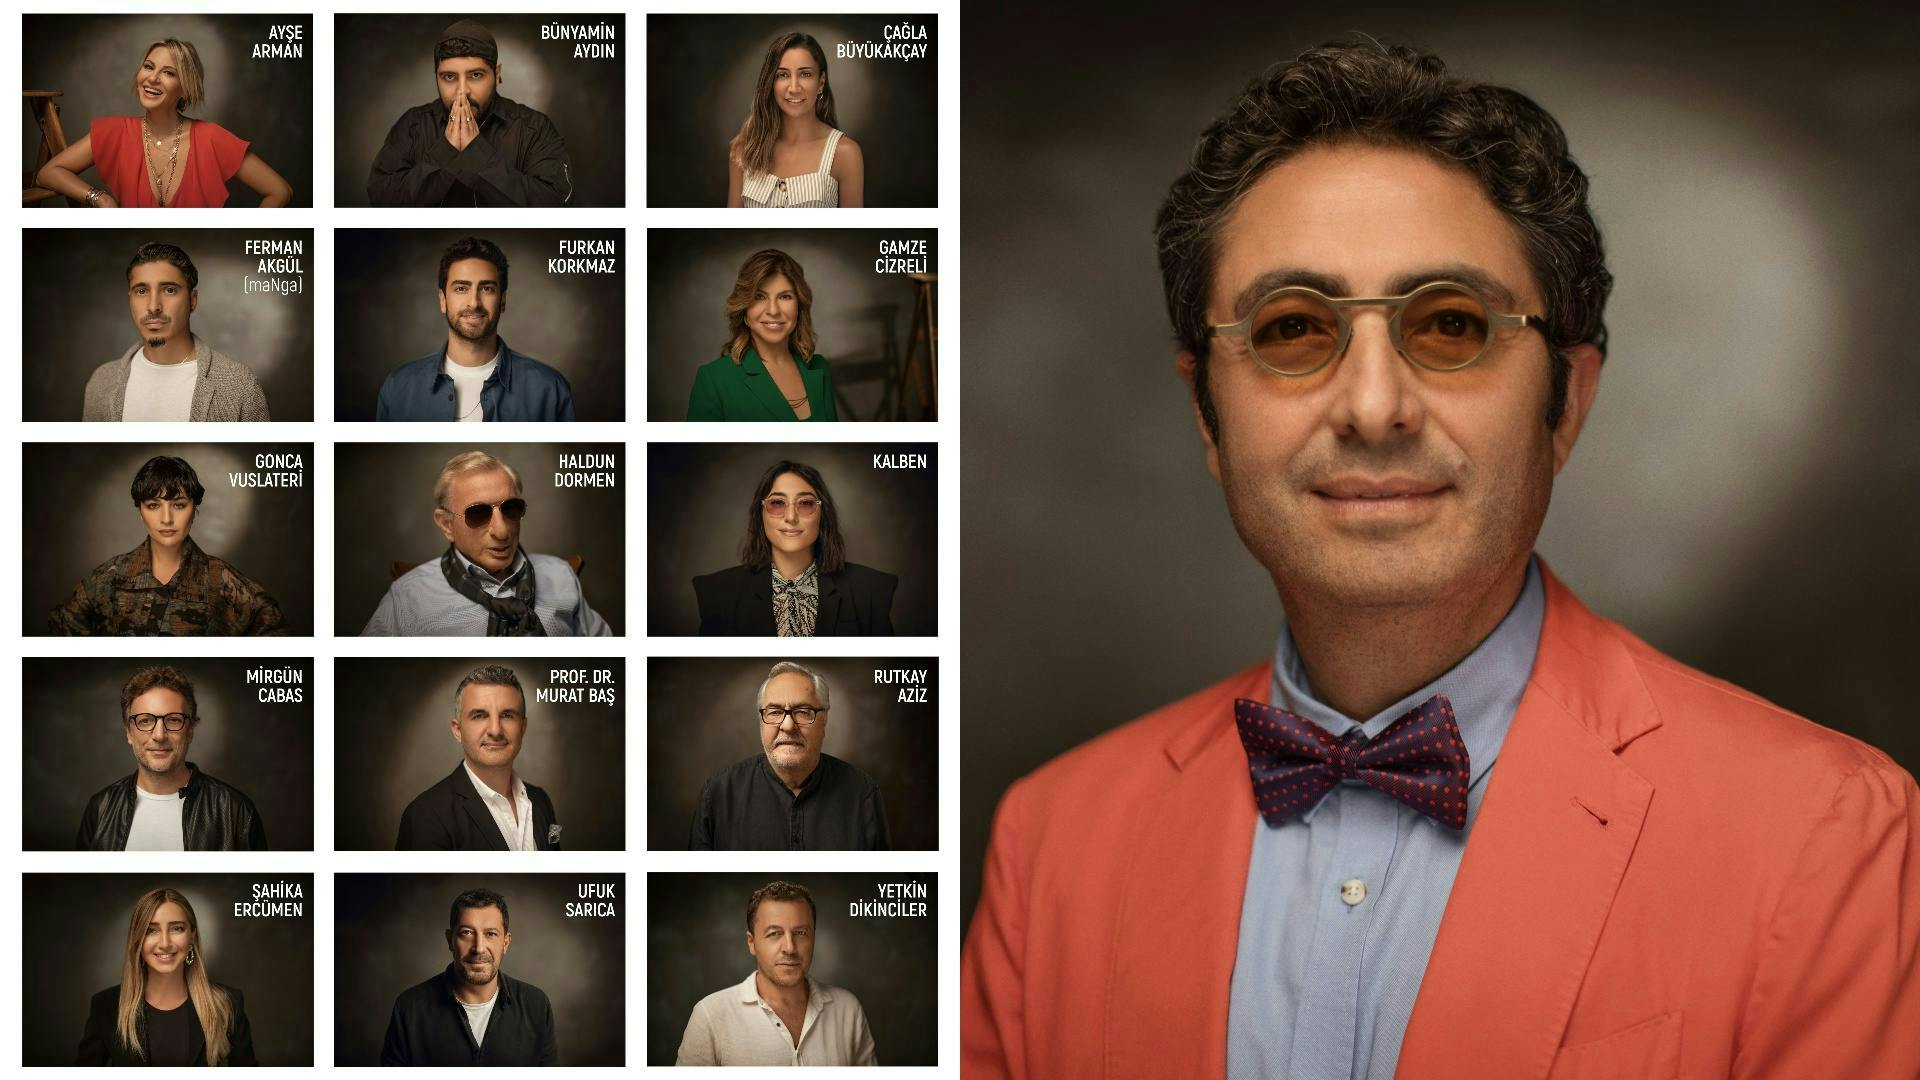 tie accessories person face sunglasses suit clothing coat collage advertisement